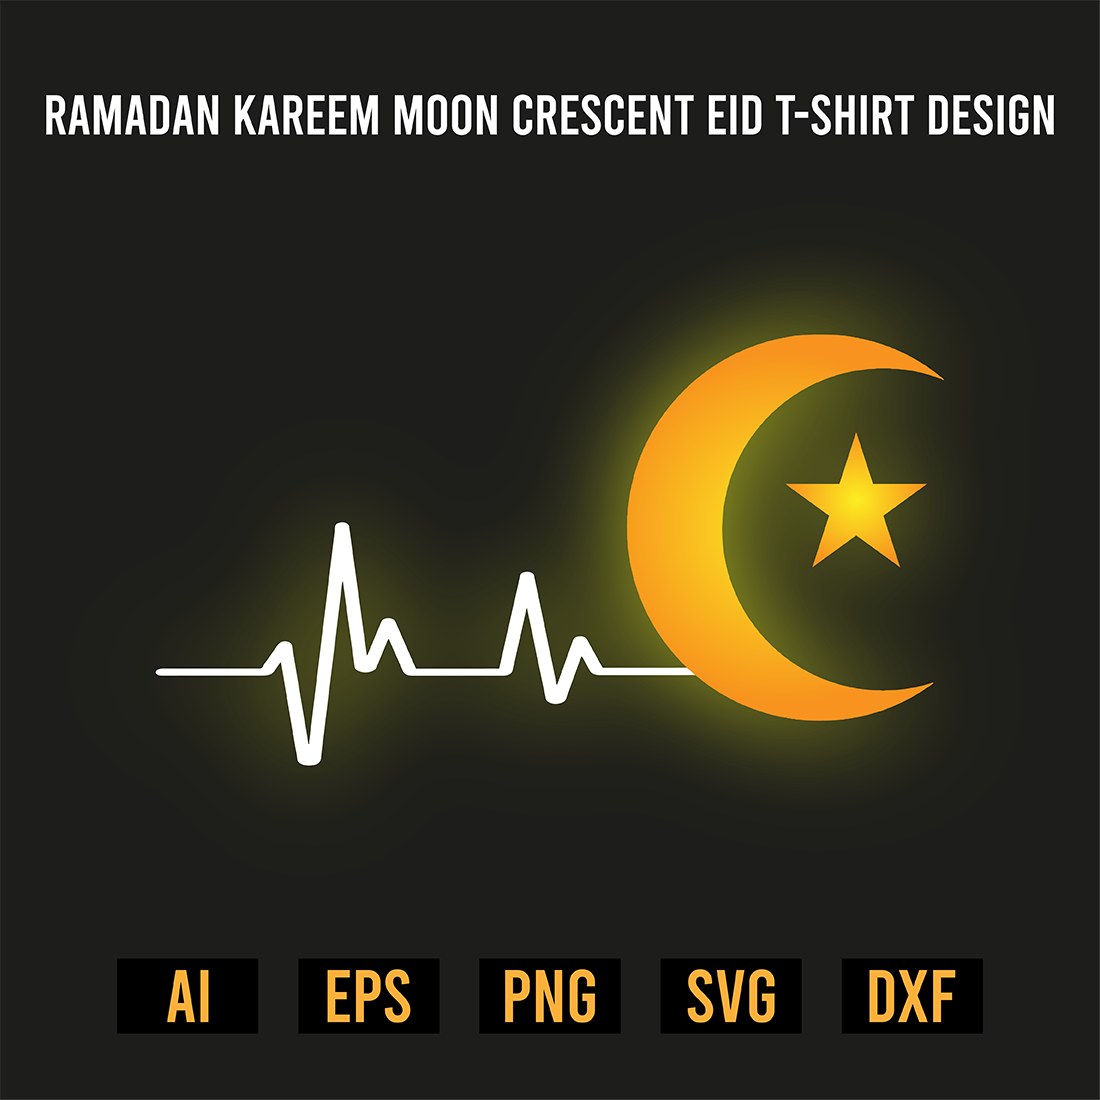 Ramadan Kareem Moon Crescent Eid T-shirt Design preview image.